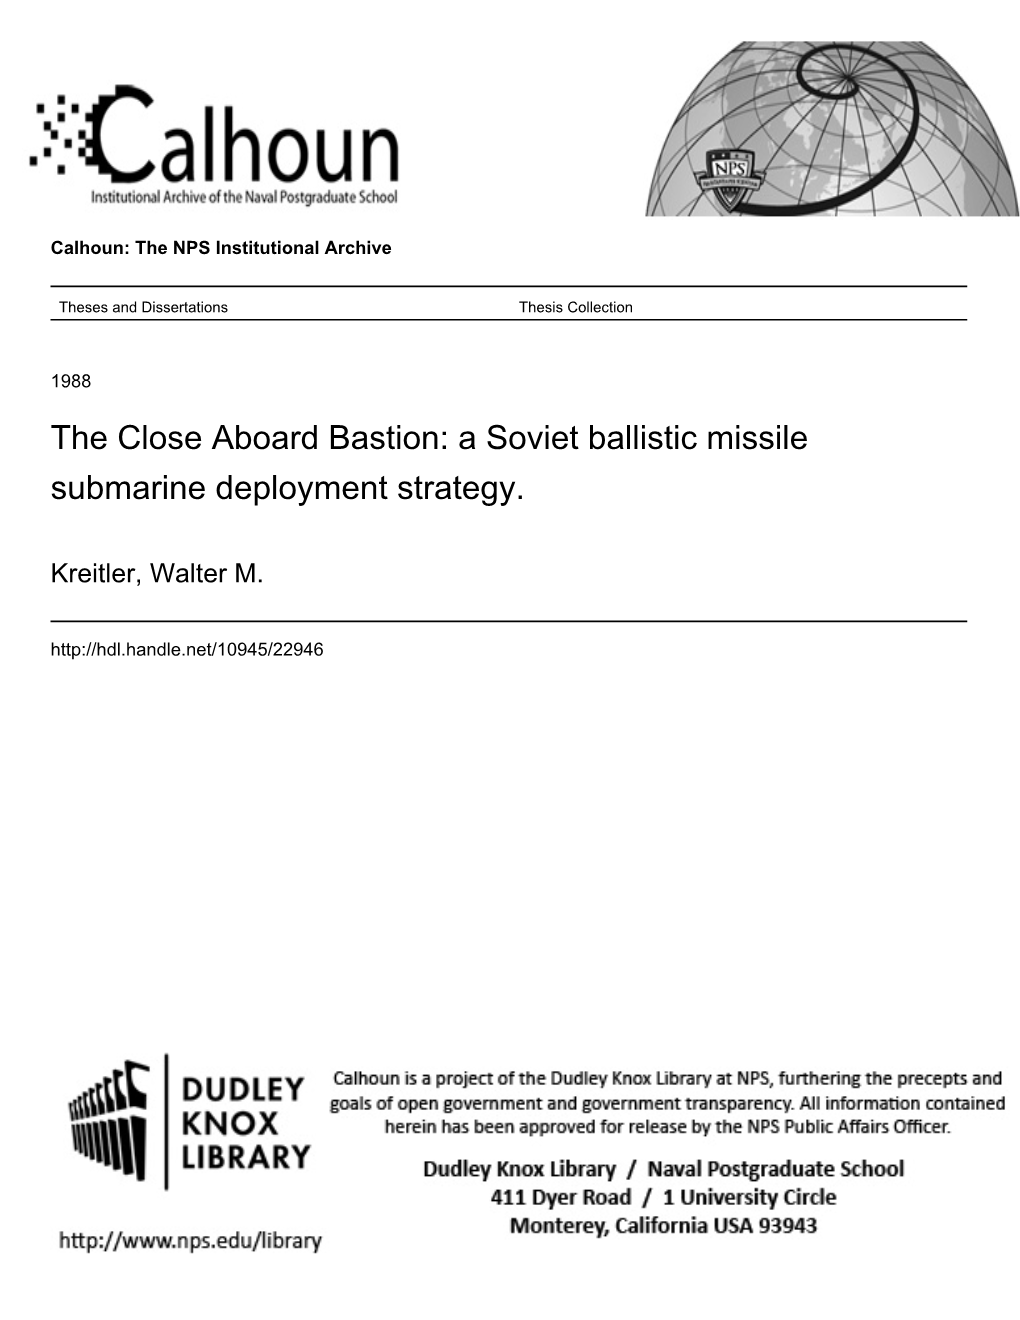 A Soviet Ballistic Missile Submarine Deployment Strategy